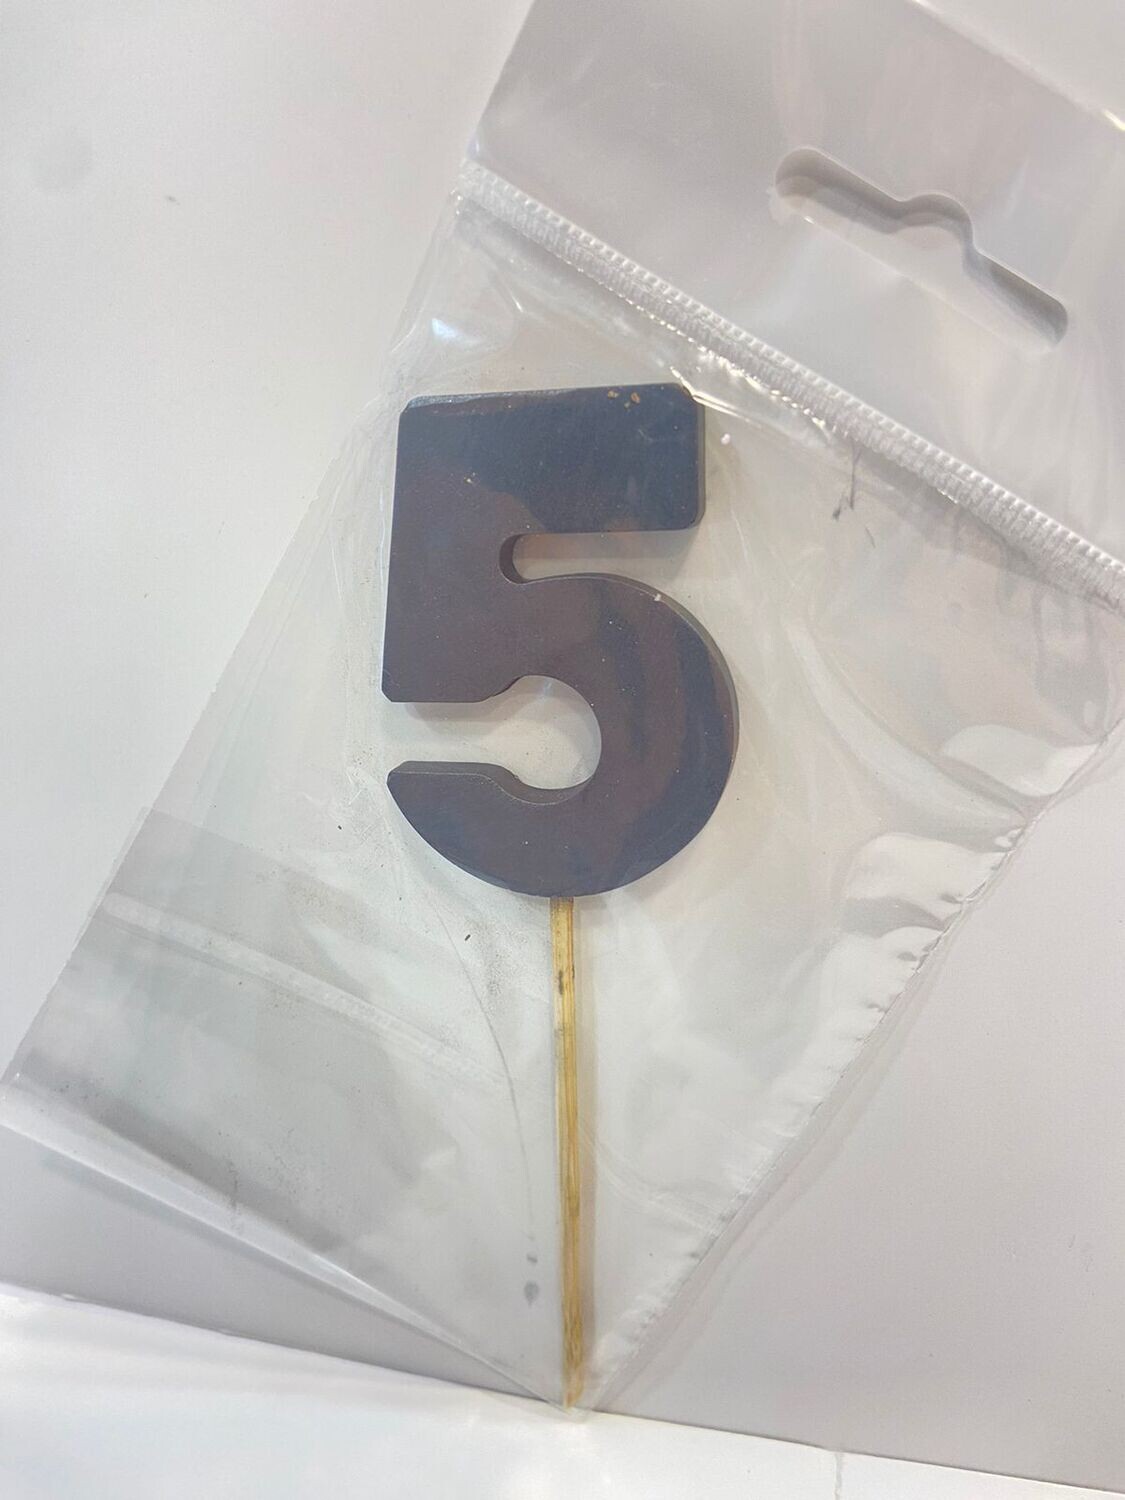 Чёрная Цифра "5" из шоколадной глазури на шпажке, высота цифры 5 см